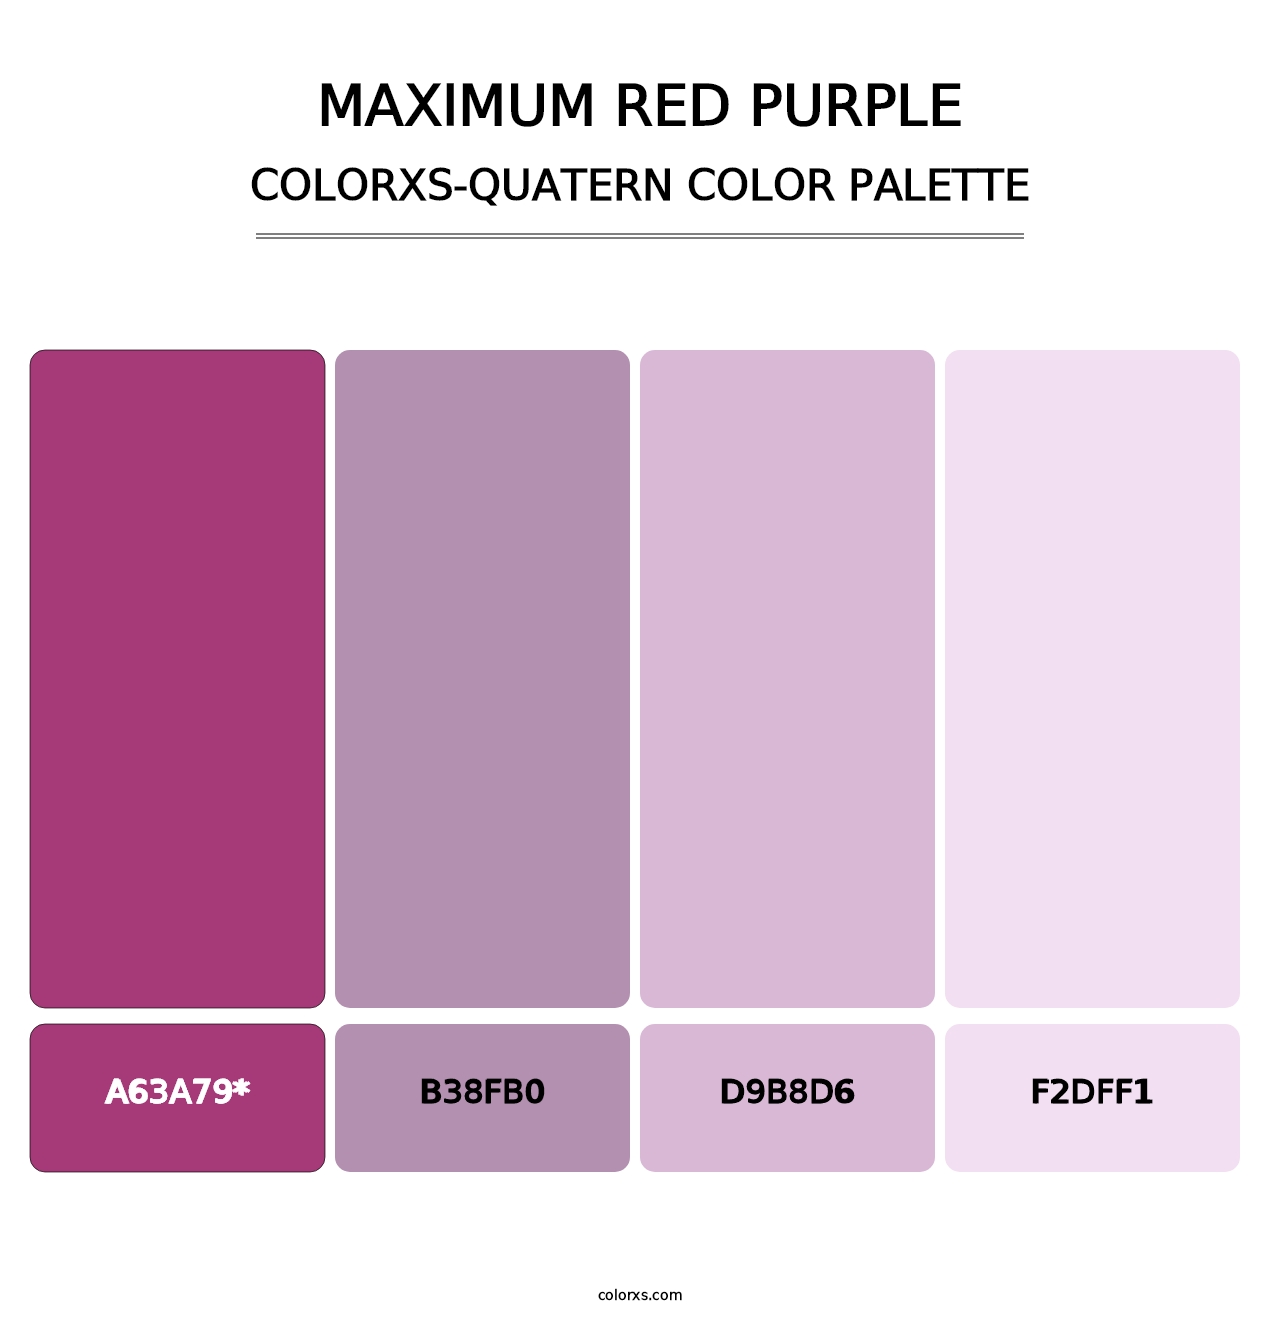 Maximum Red Purple - Colorxs Quatern Palette